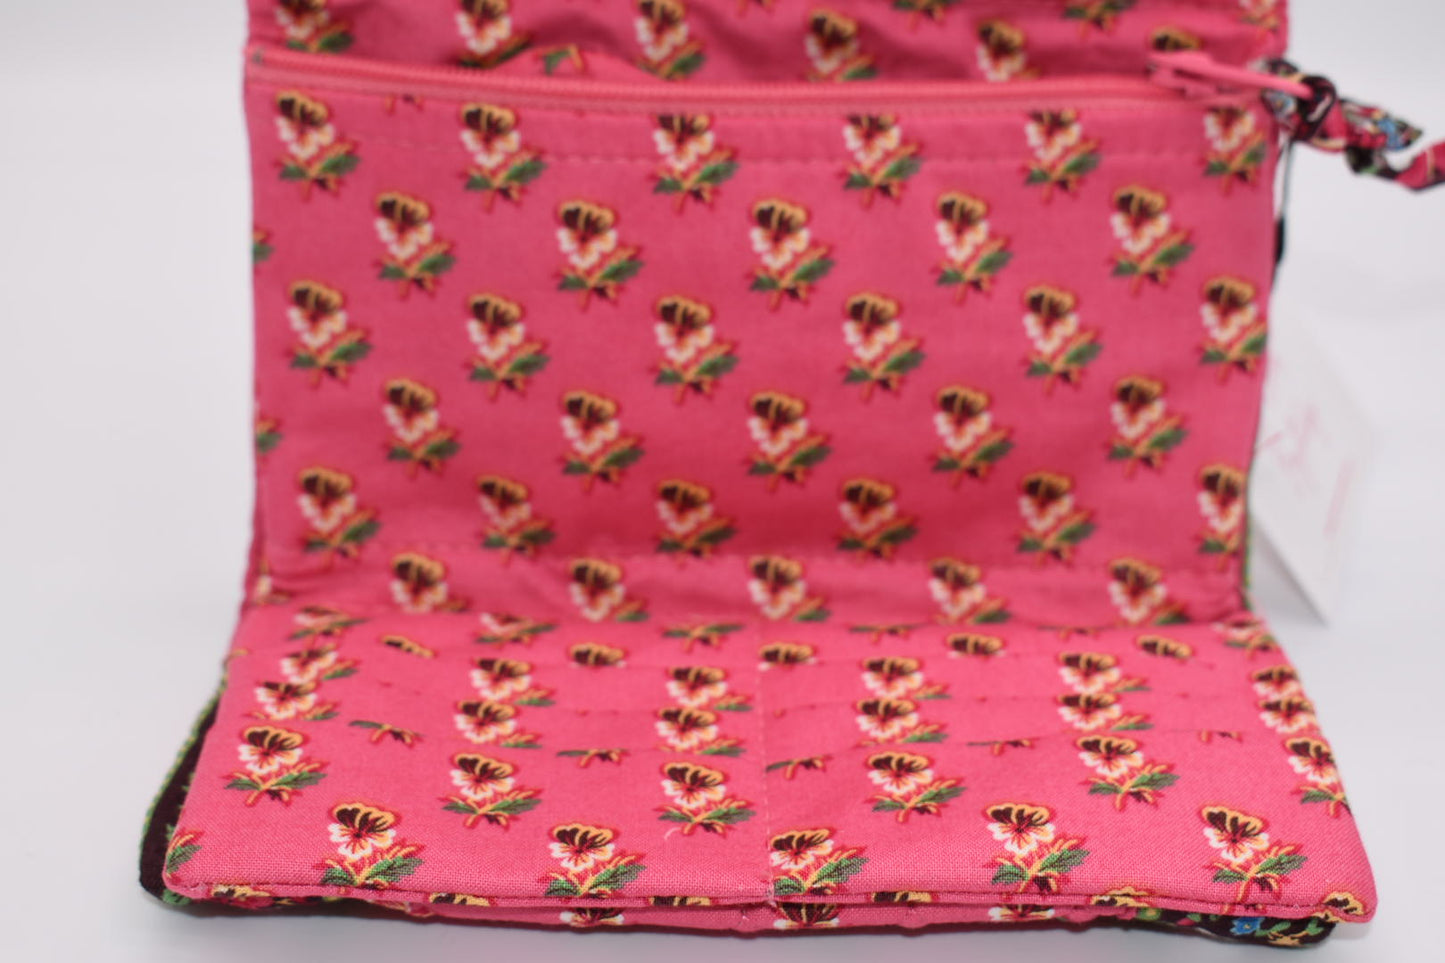 Vera Bradley Strap Wallet / Crossbody in "Pink Pansy" Pattern